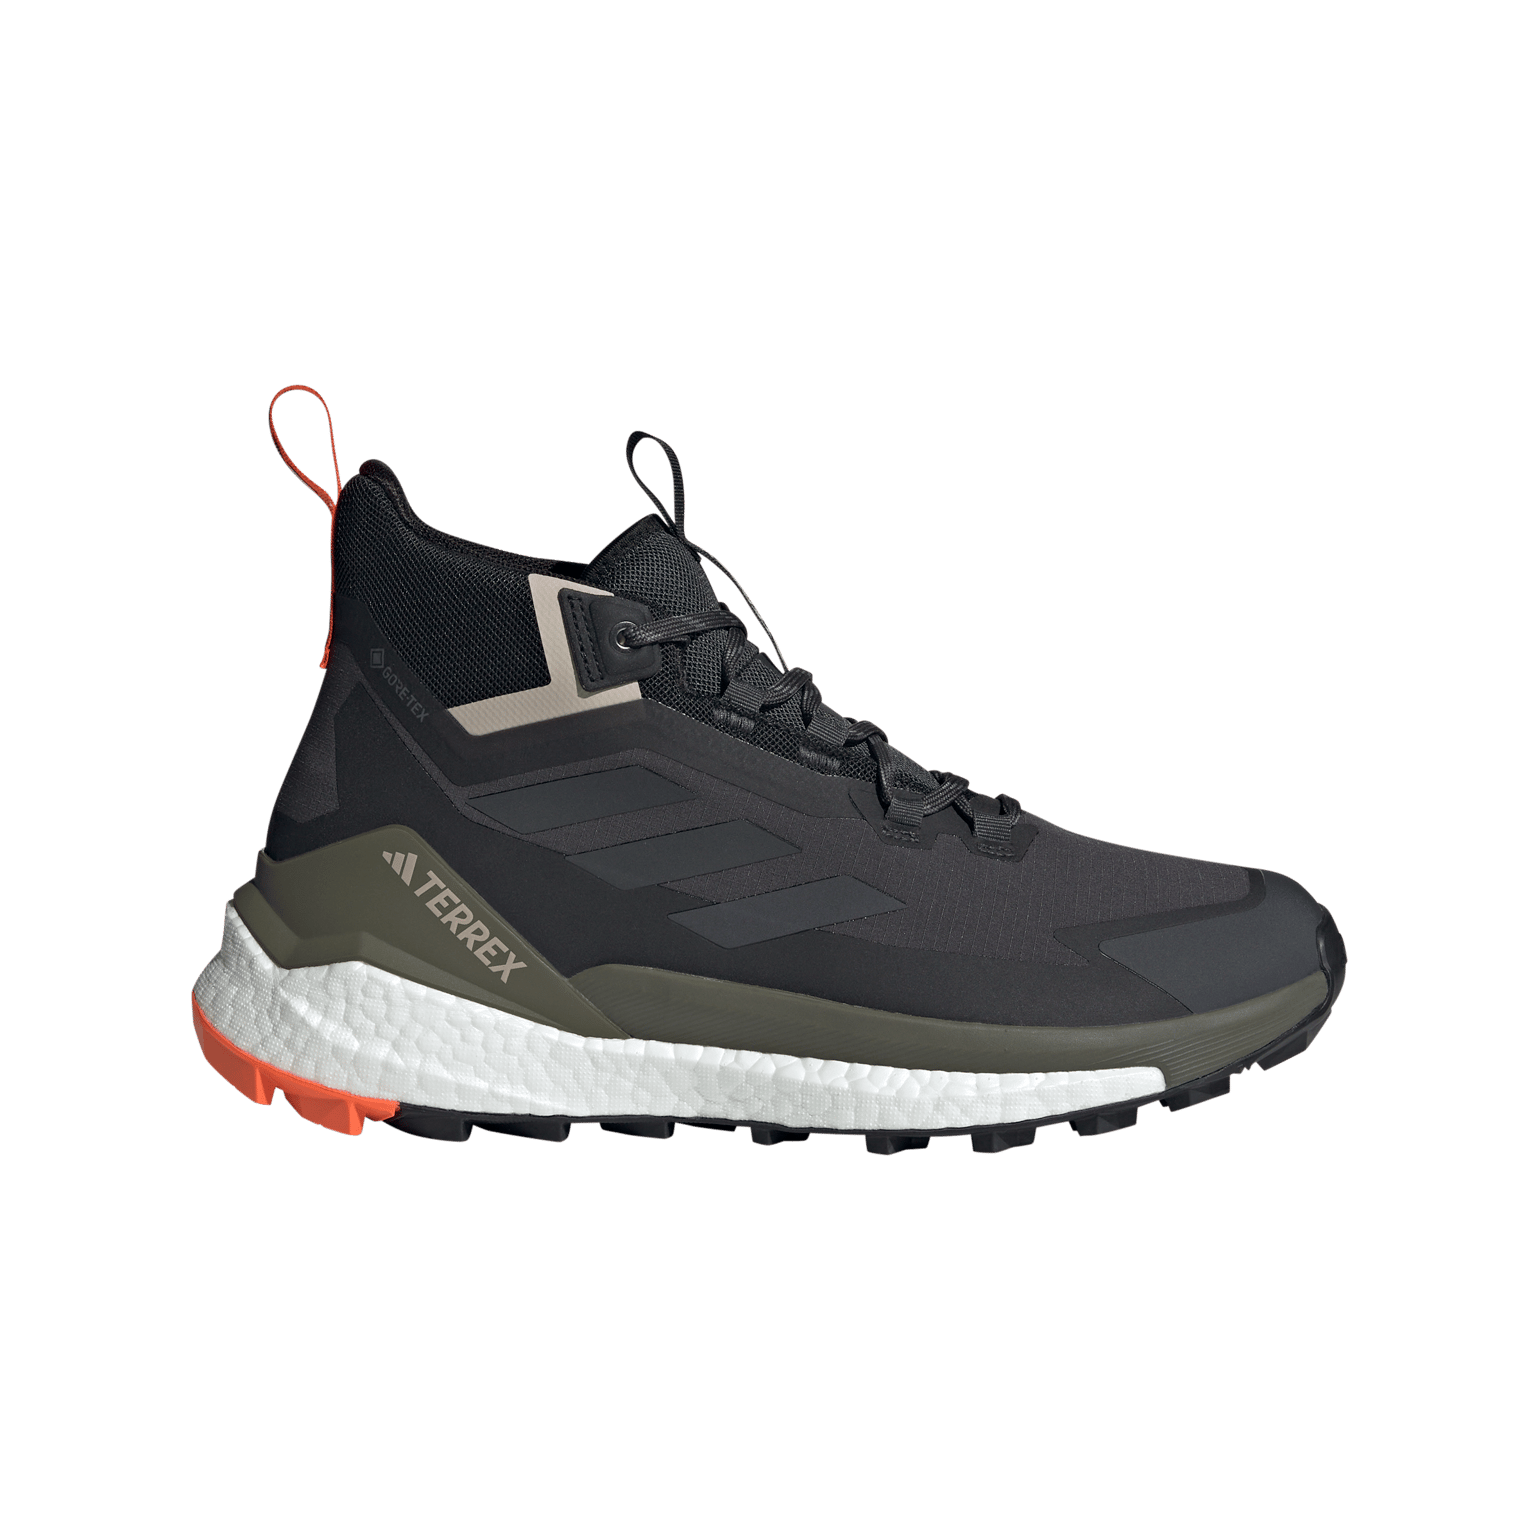 Adidas Men's Terrex Free Hiker GORE-TEX Hiking Shoes 2.0 Carbon/Gresix/Cblack